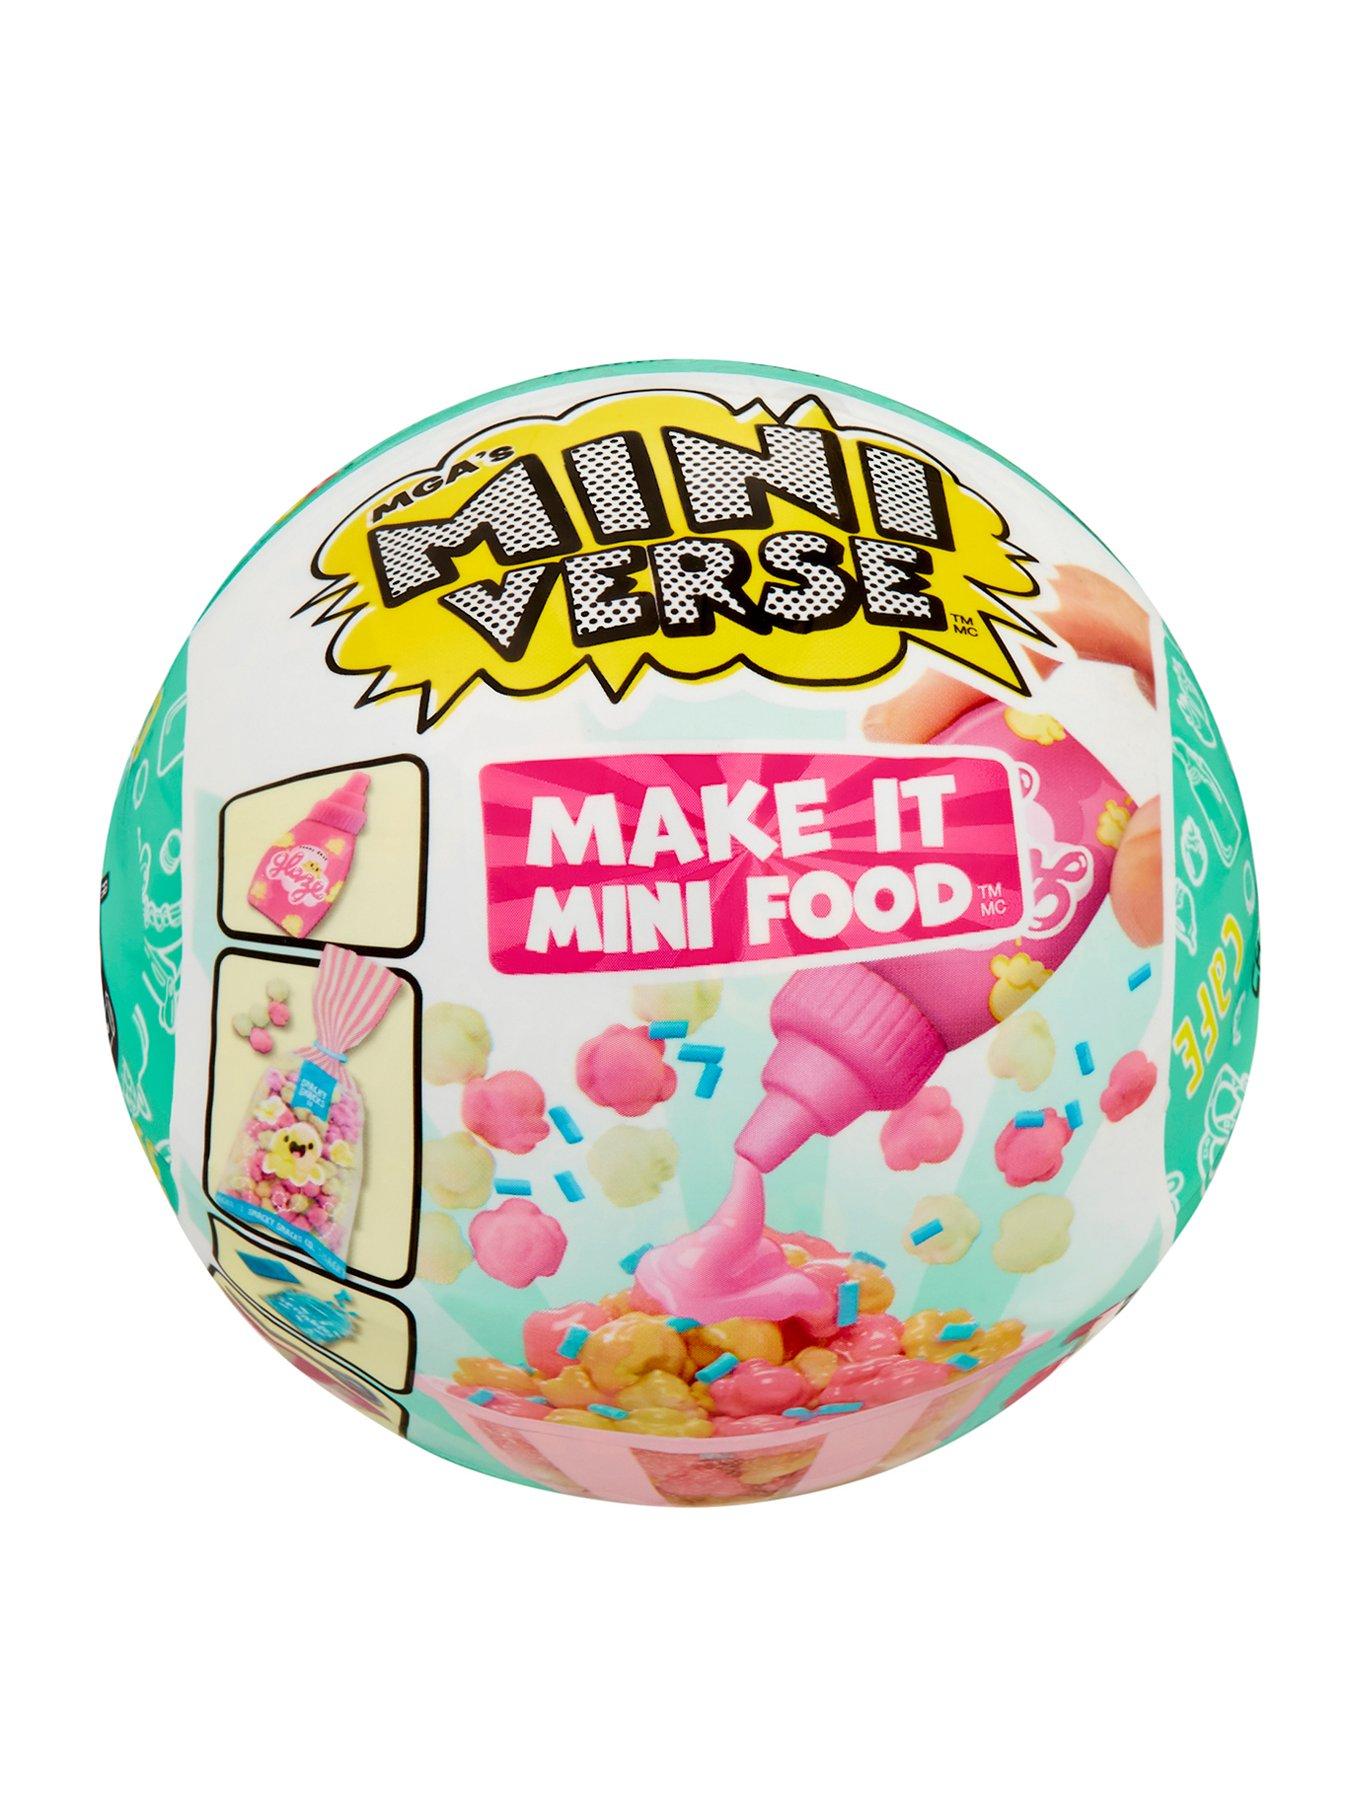 Zuru 5 Surprise Mini Brands Series 1 Toy Shop Playset, 1 ct - Food 4 Less